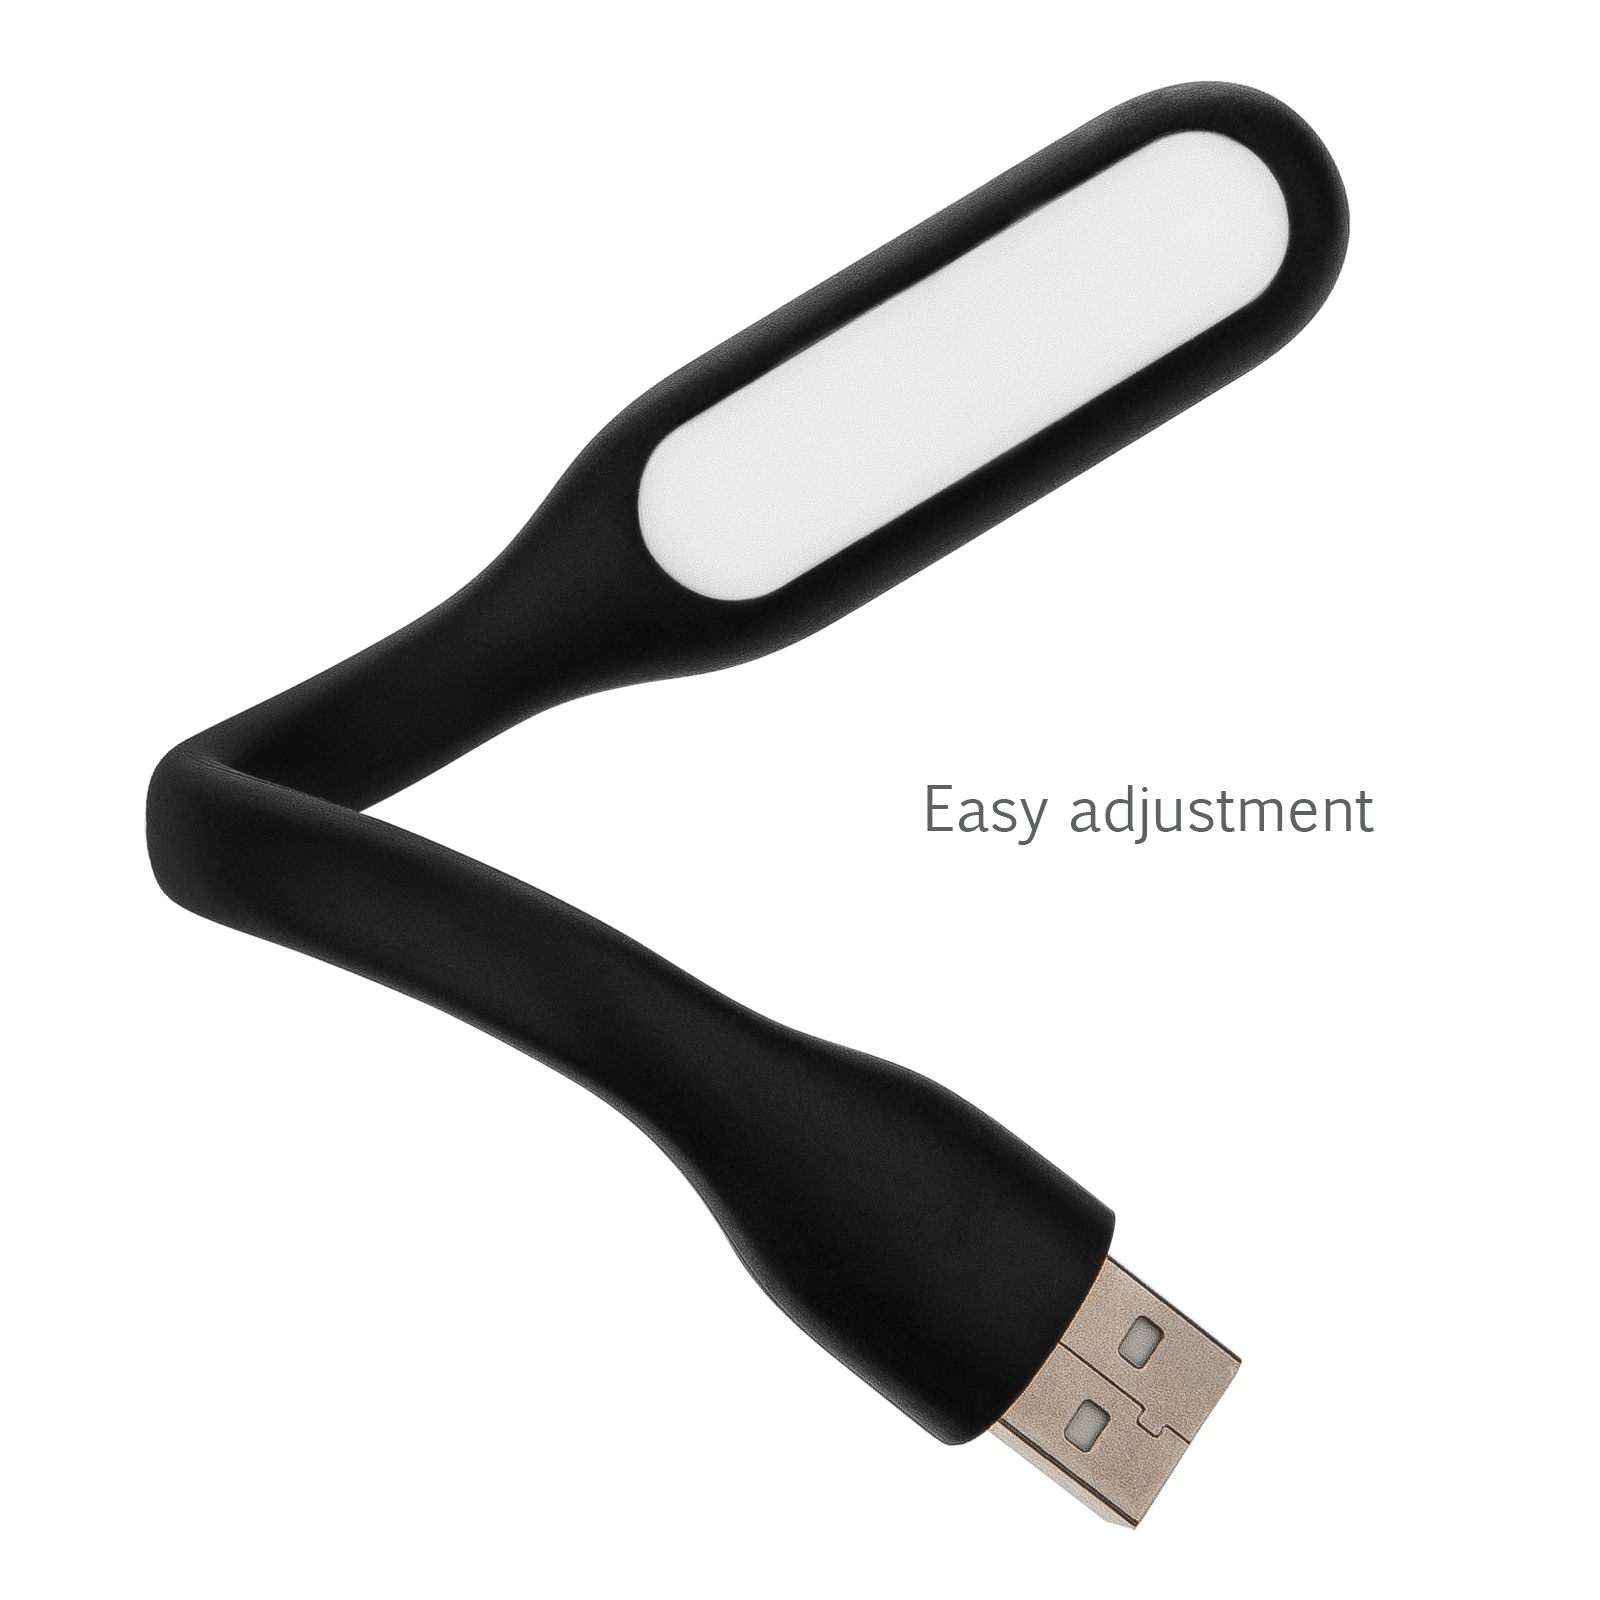 YouSave Accessories USB Light - Black